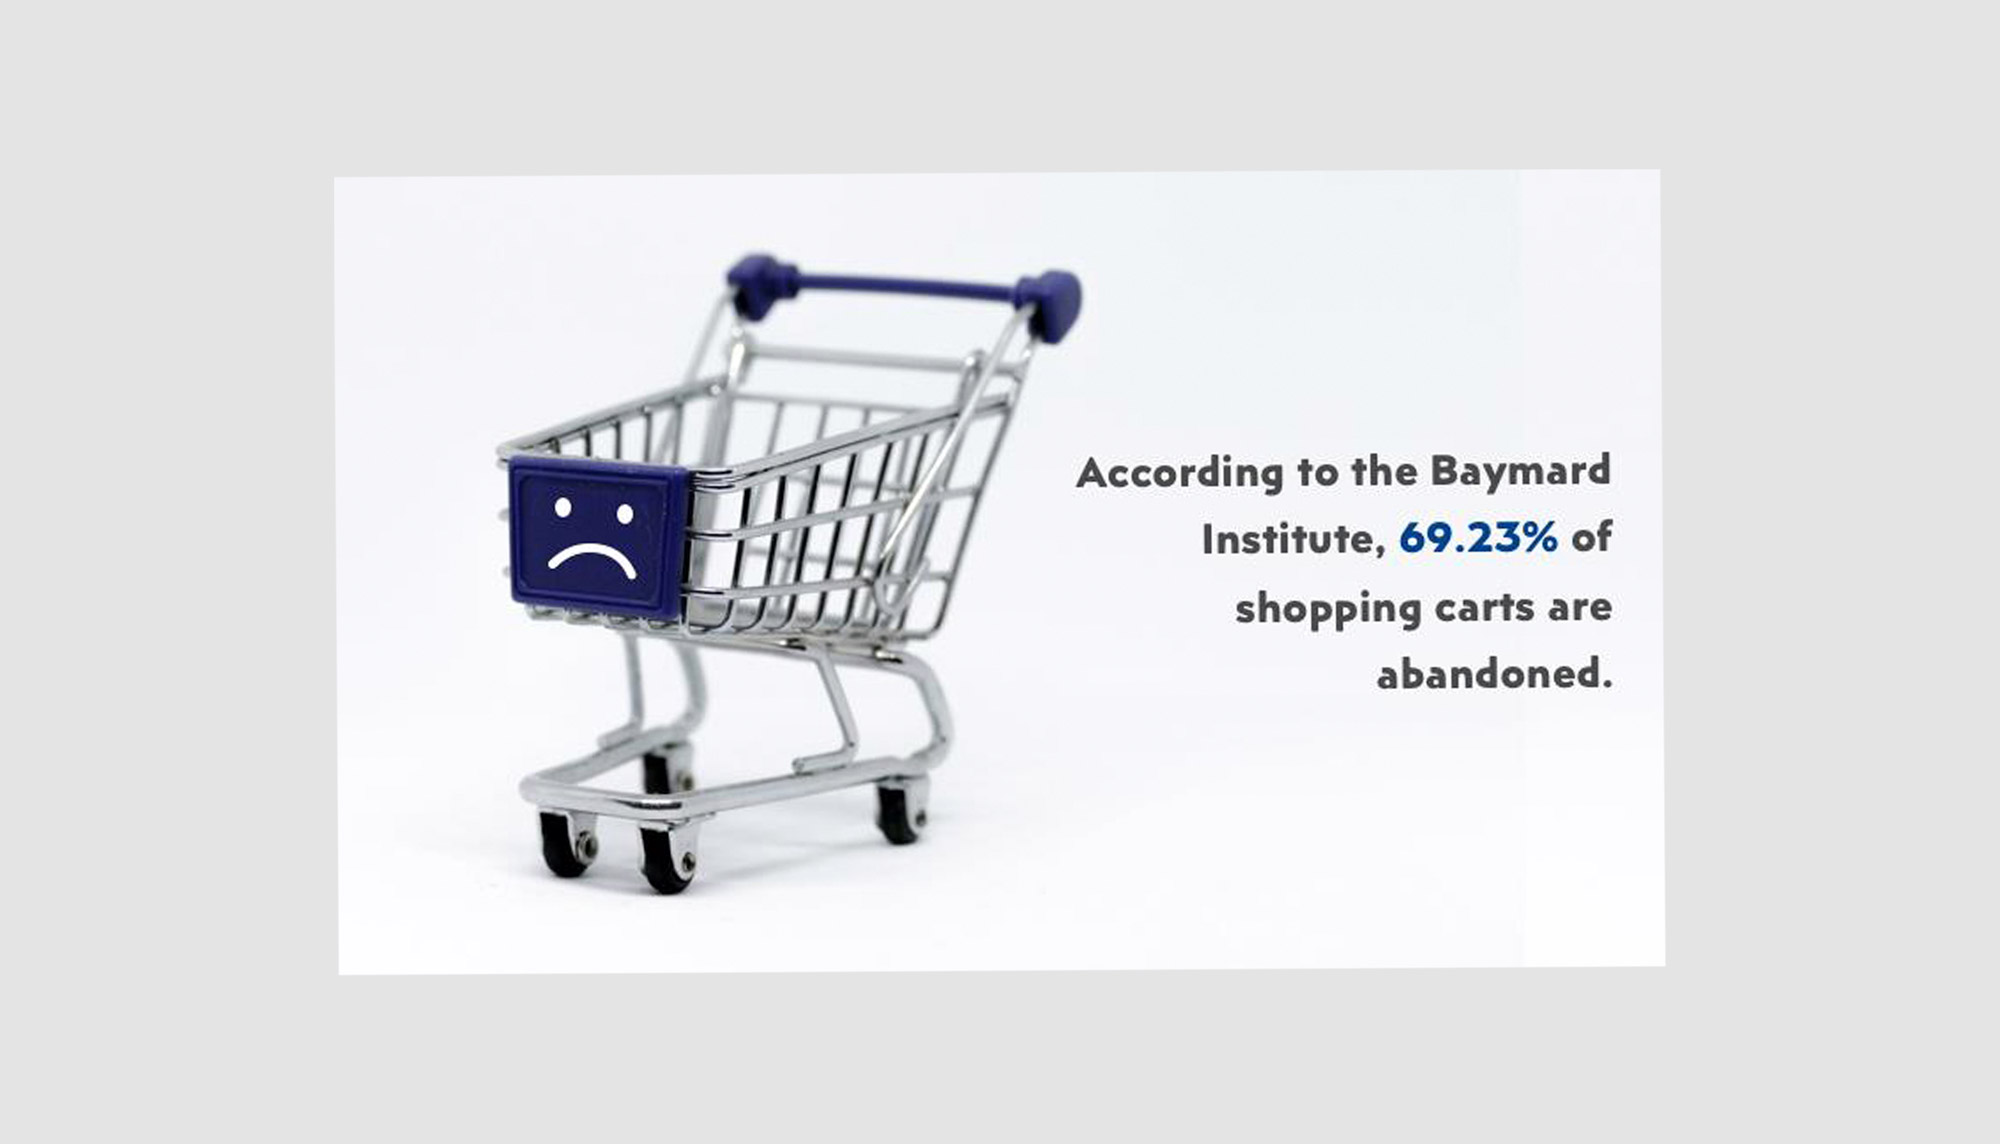 Gafas-baymard-institute-reasons-for-abandoned-cart